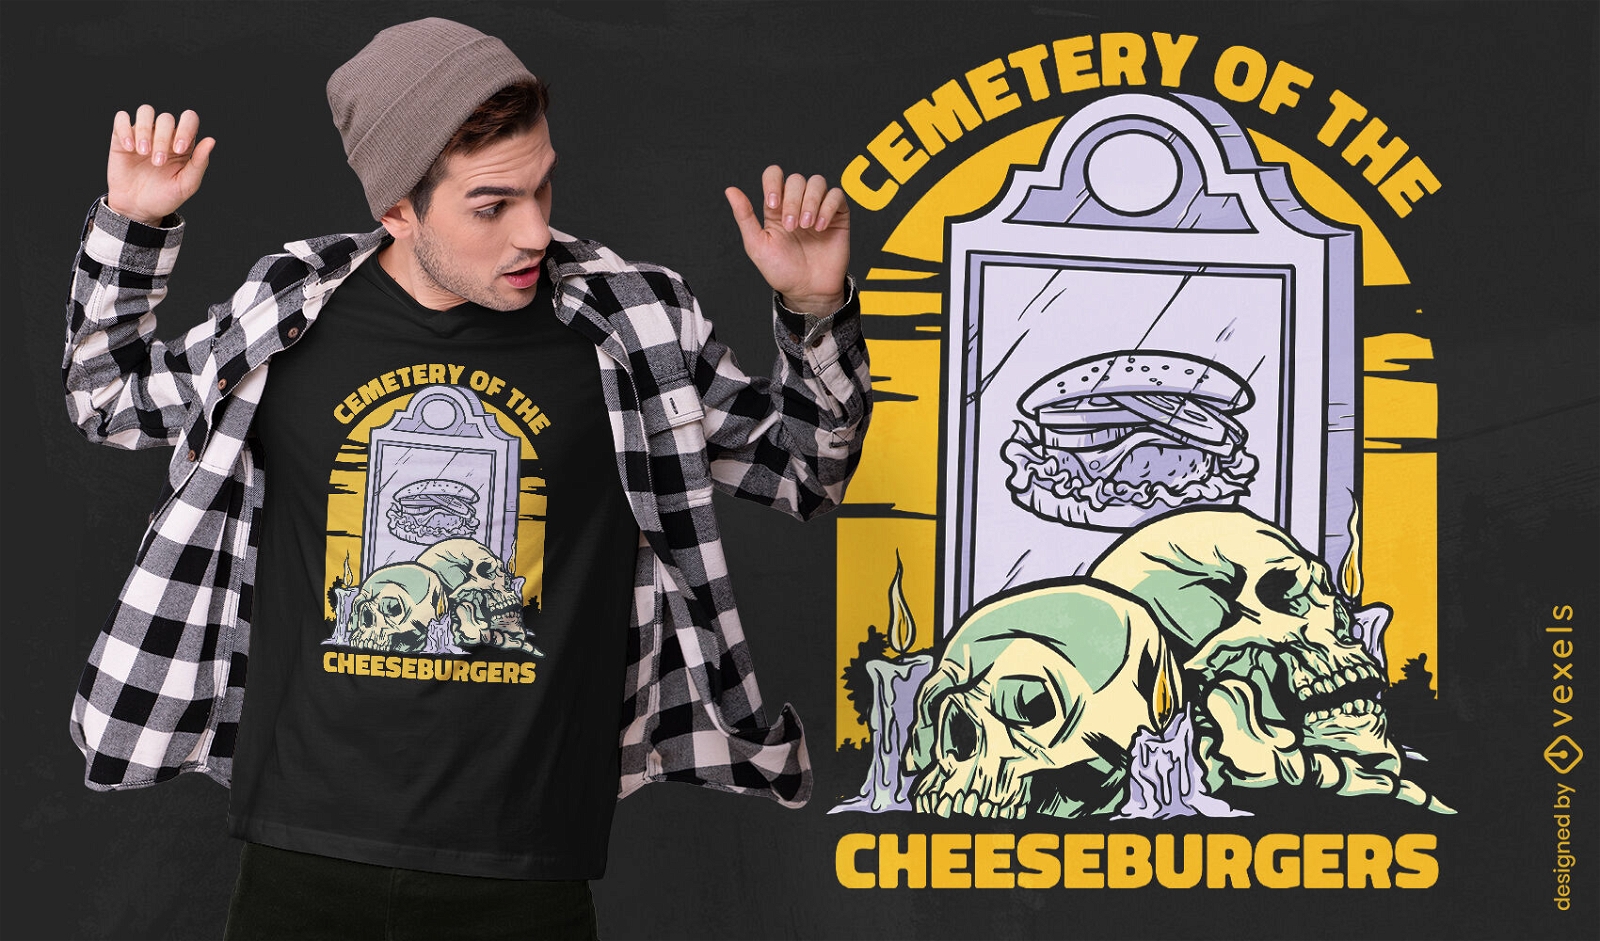 Cheeseburger cemetery quote t-shirt design